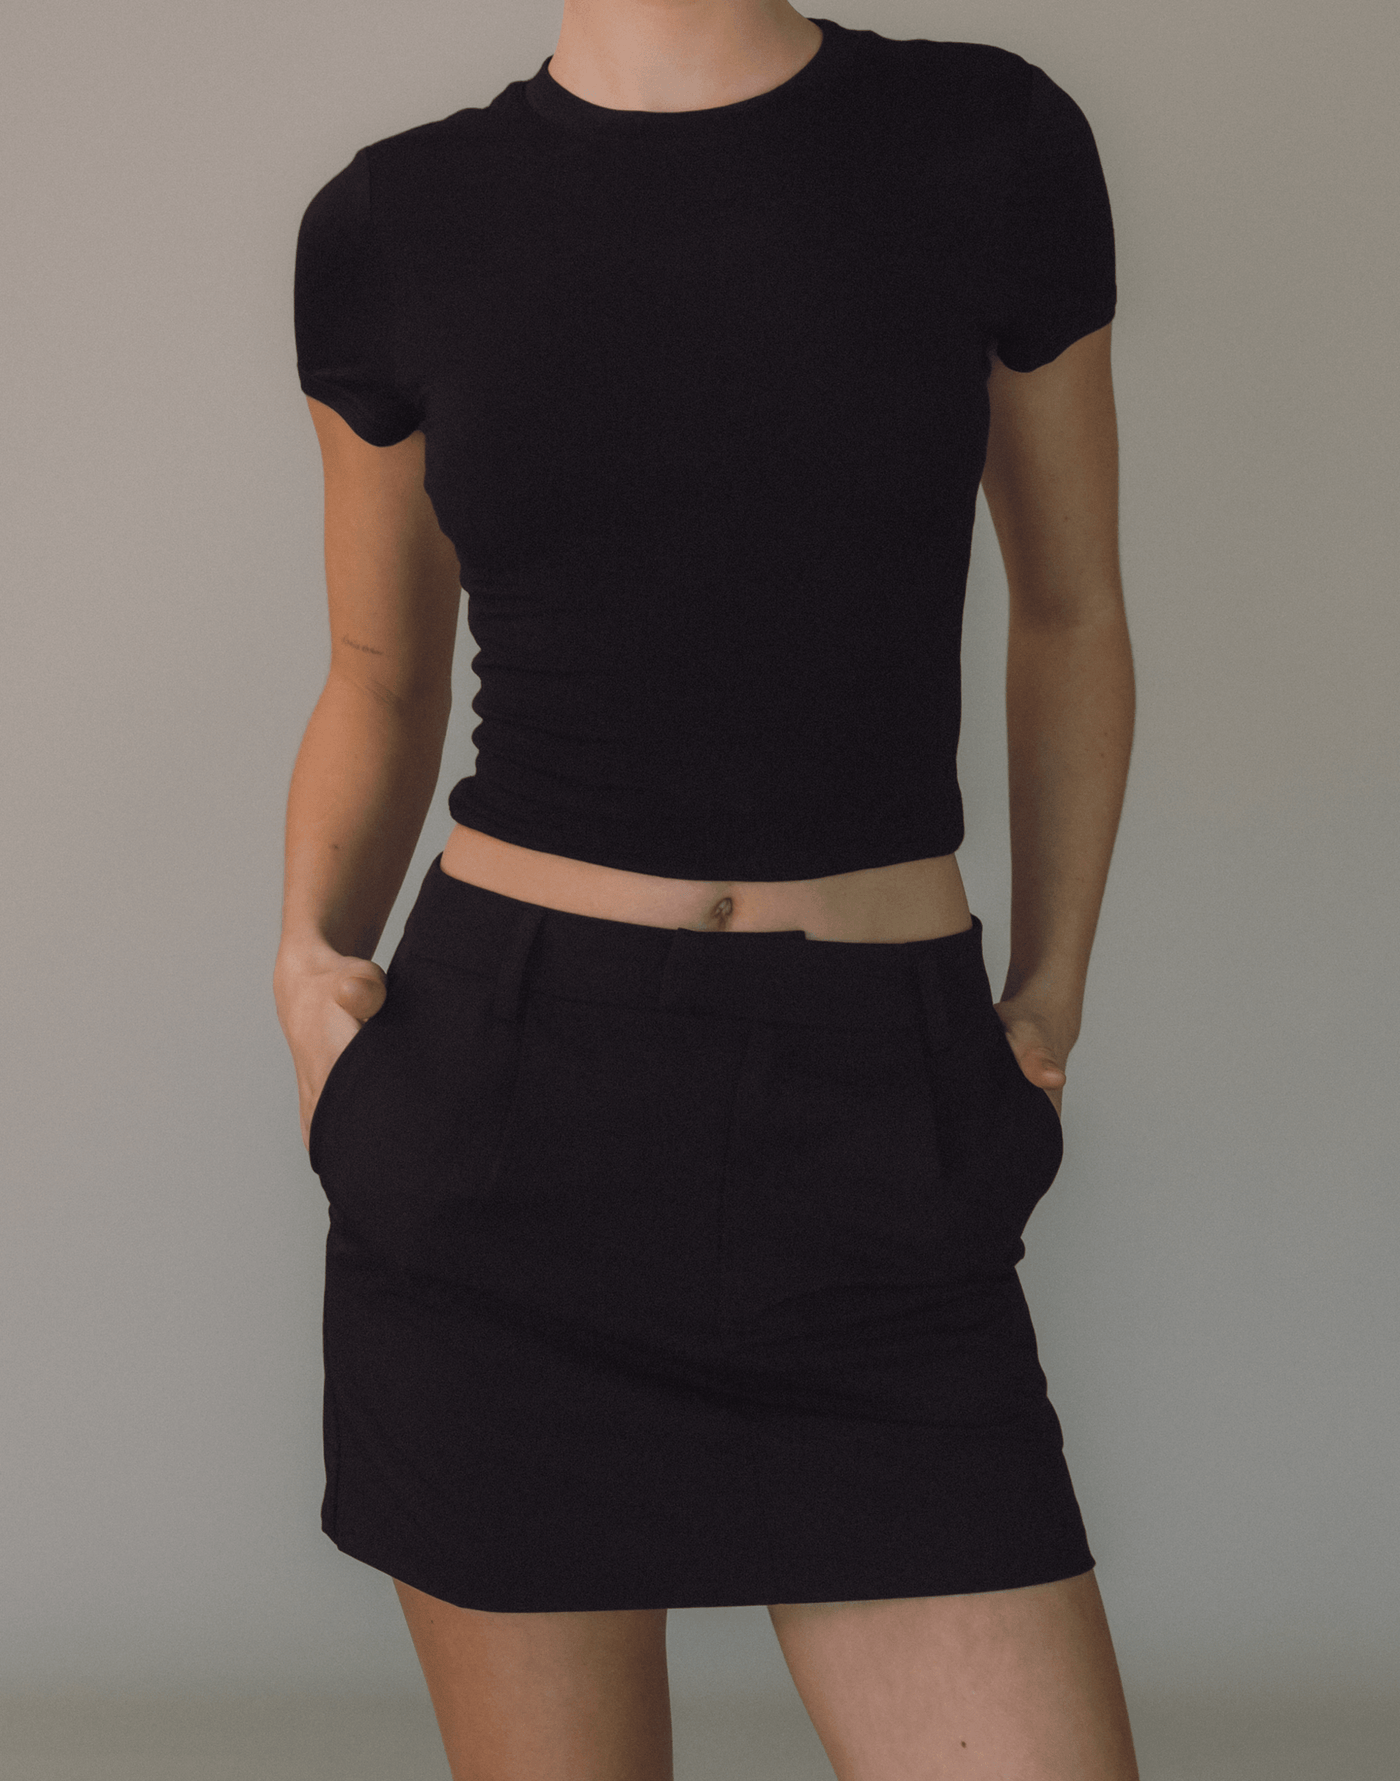 Nighthawk Jersey Tee (Black) - Soft Tee - Women's Top - Charcoal Clothing